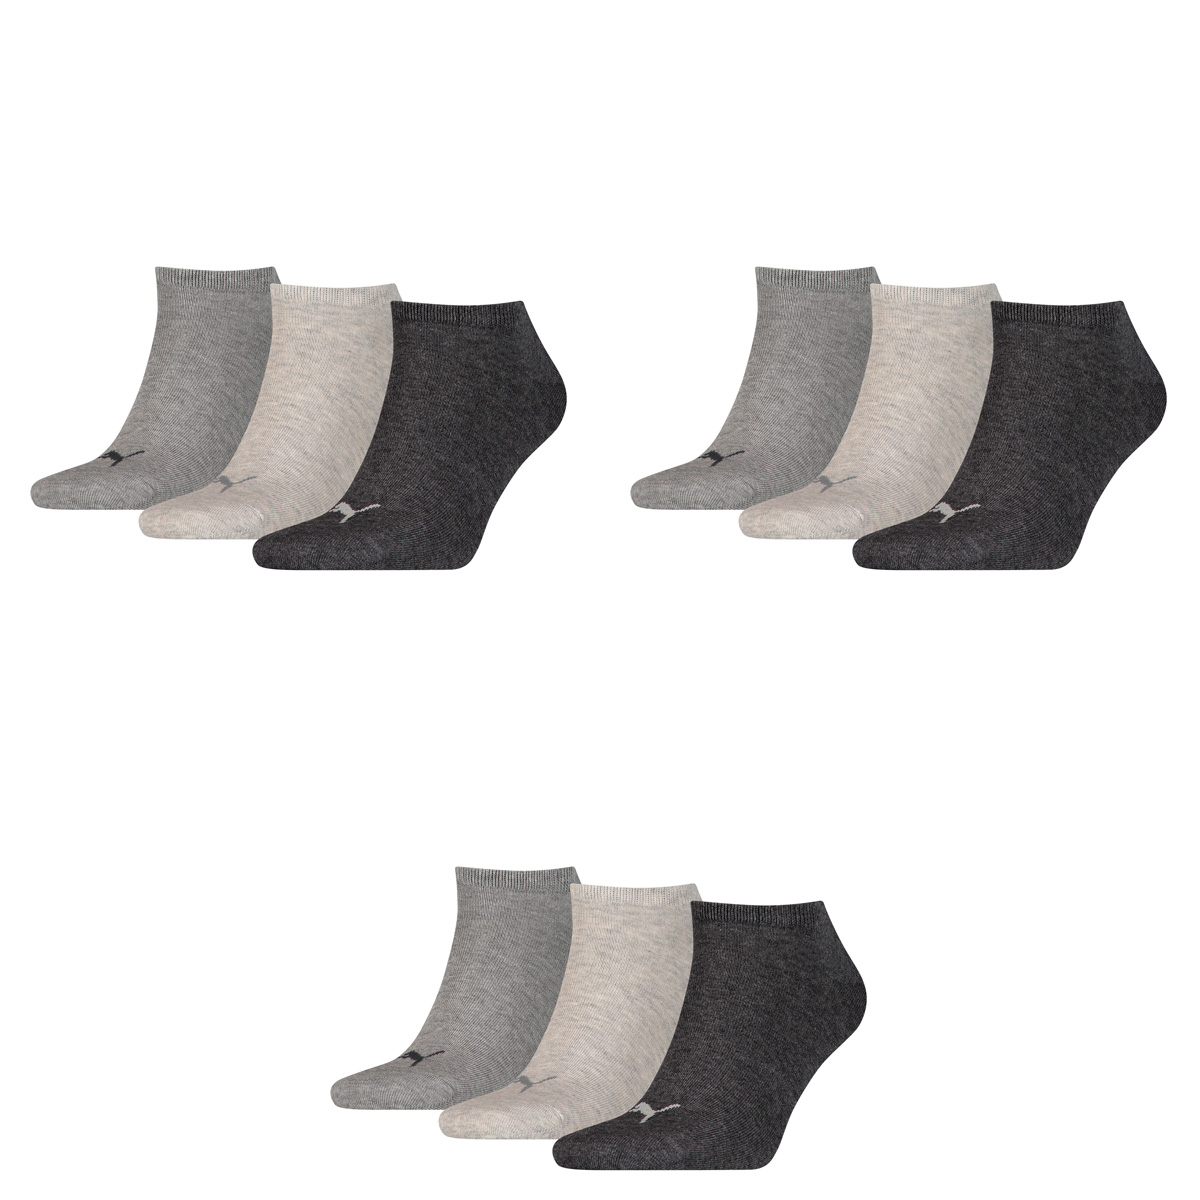 Puma unisex Sneaker Socken Kurzsocken Sportsocken 261080001 18 Paar, Farbe:Grau, Menge:18 Paar (6 x 3er Pack), Größe:35-38, Artikel:-800 anthracite/l mel grey/m mel grey